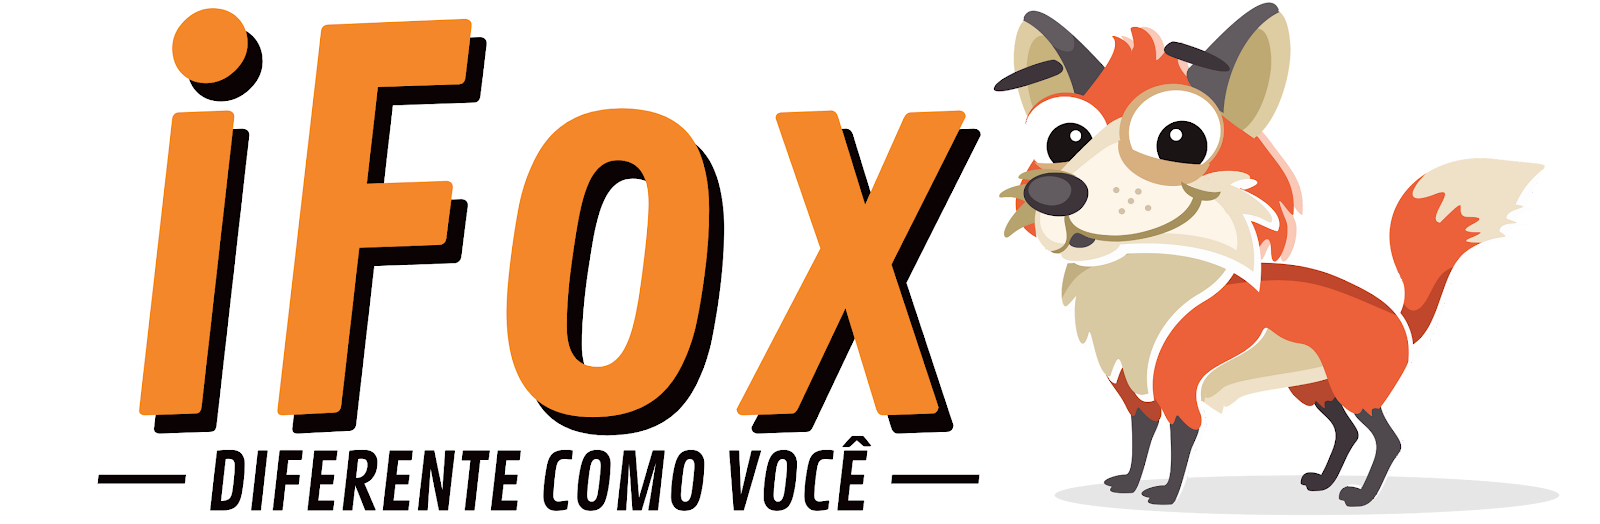 iFox